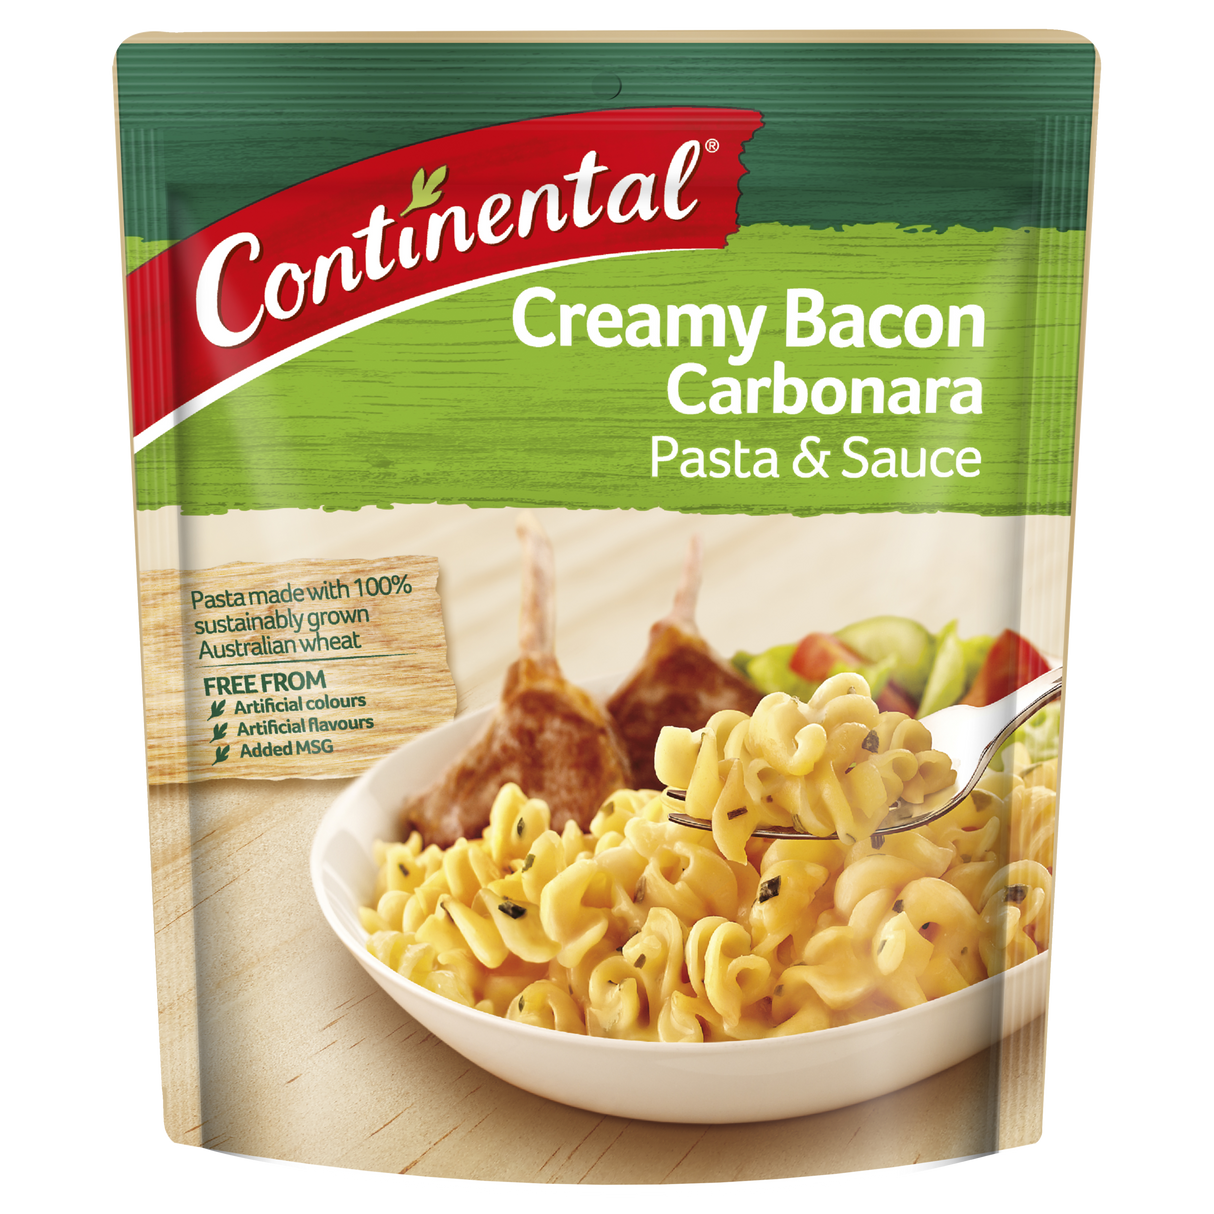 Continental Pasta & Sauce Creamy Bacon Carbonara 85g